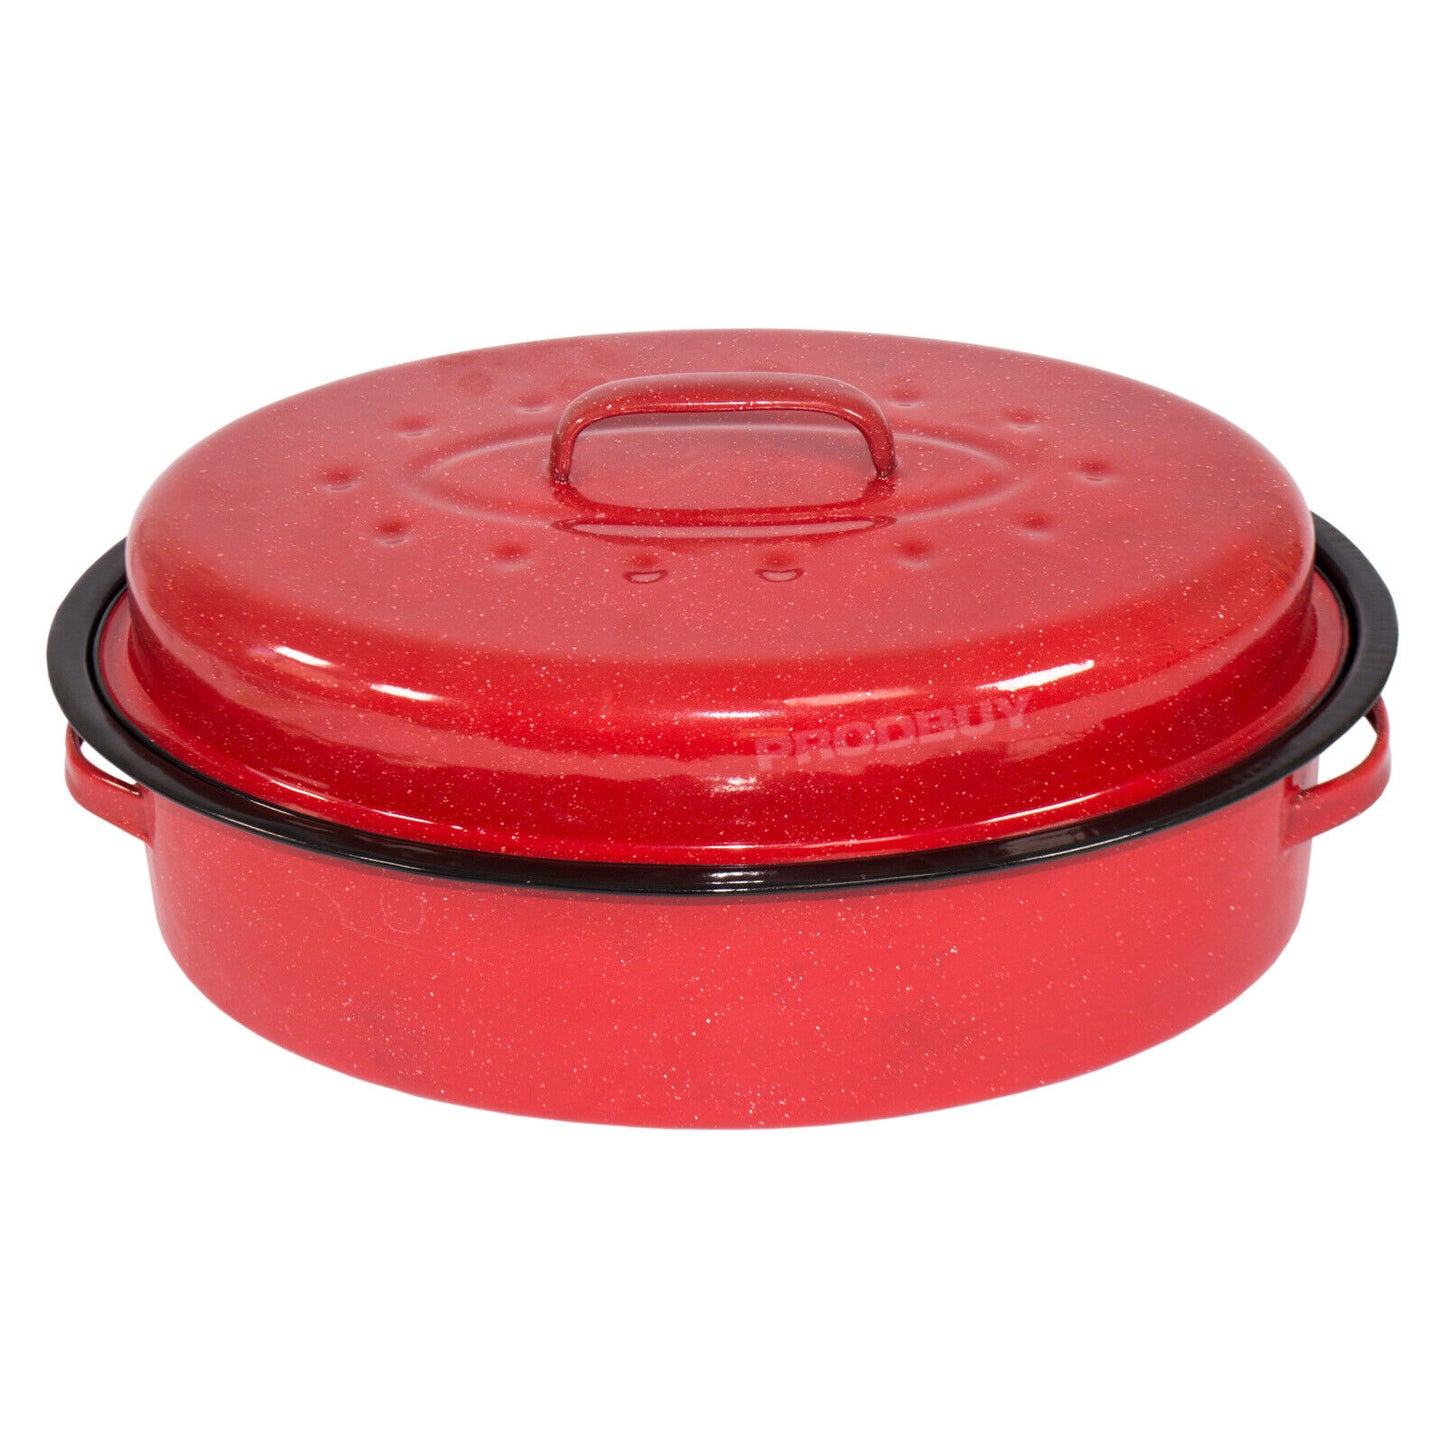 Large Red 4.5 Litre Oval Self Basting Enamel Roasting Tin